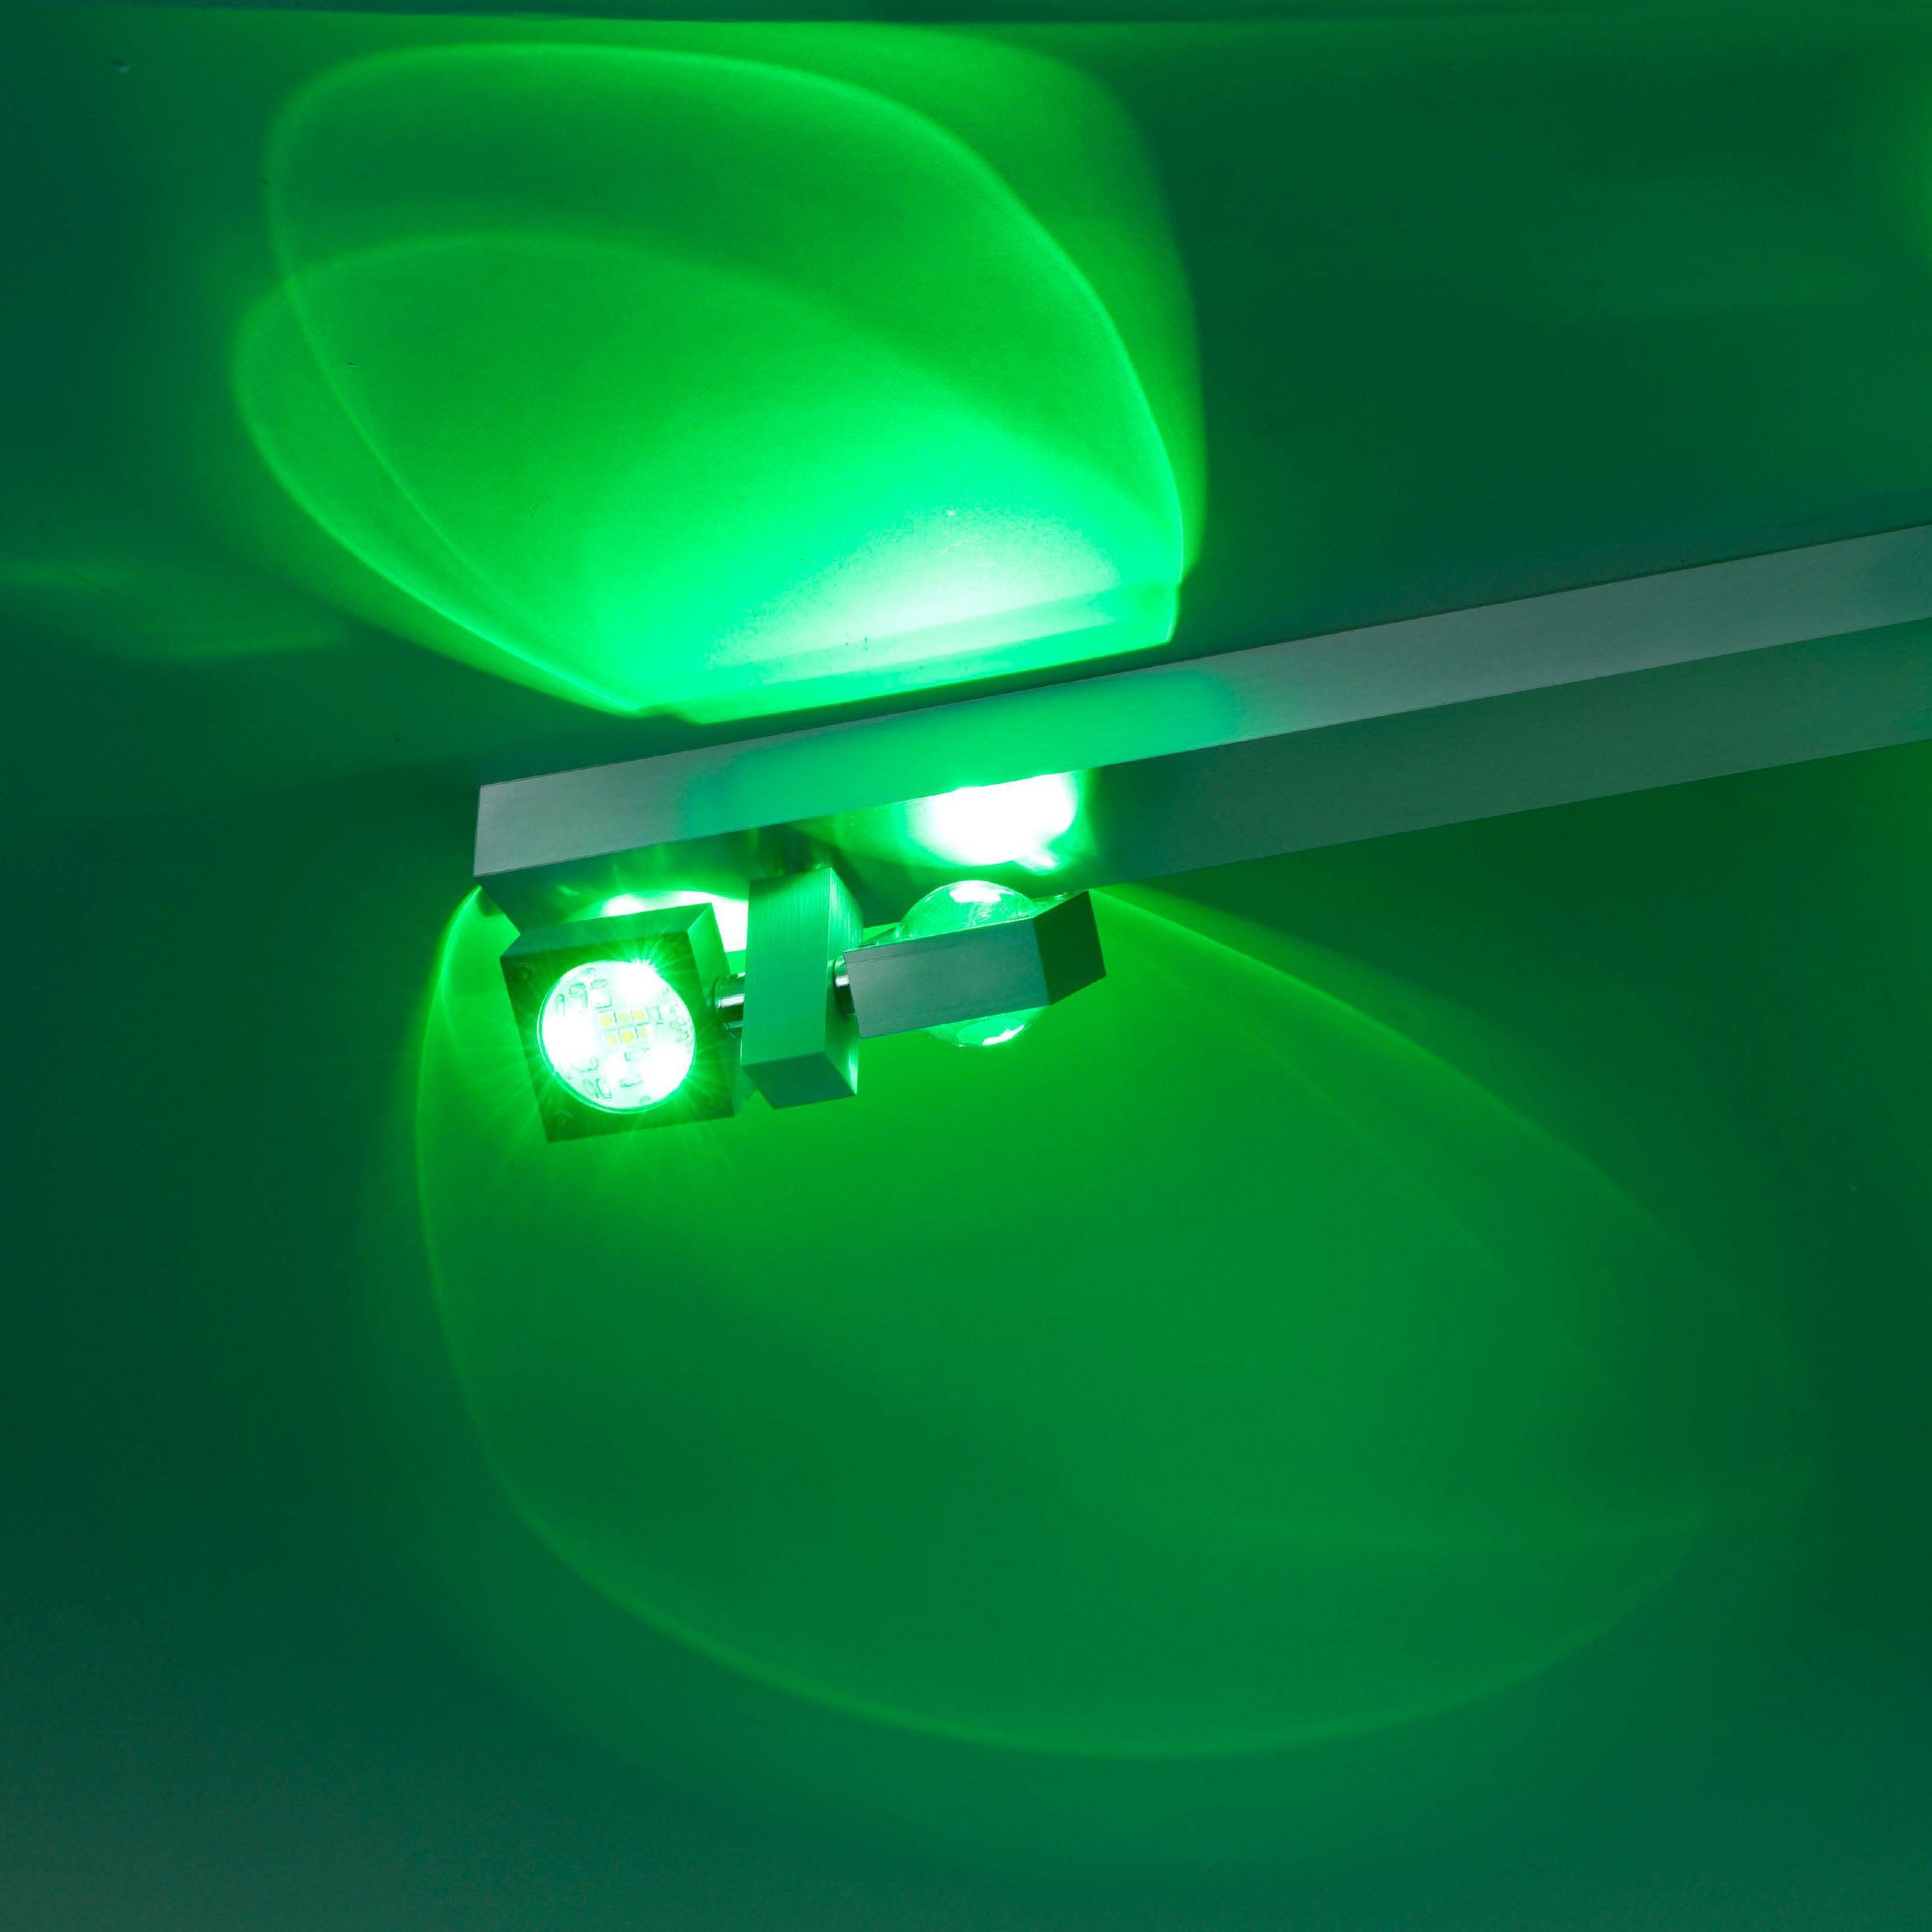 Paul Neuhaus Smarte LED-Leuchte Smart Smart NEMO Home, RGB Deckenlampe Dimmfunktion, Q Memoryfunktion, LED CCT dimmbar - Strahler Farbwechsel, RGB-Farbwechsel, Spot mit Fernbedienung Leuchtmittel, CCT-Farbtemperaturregelung, + Home